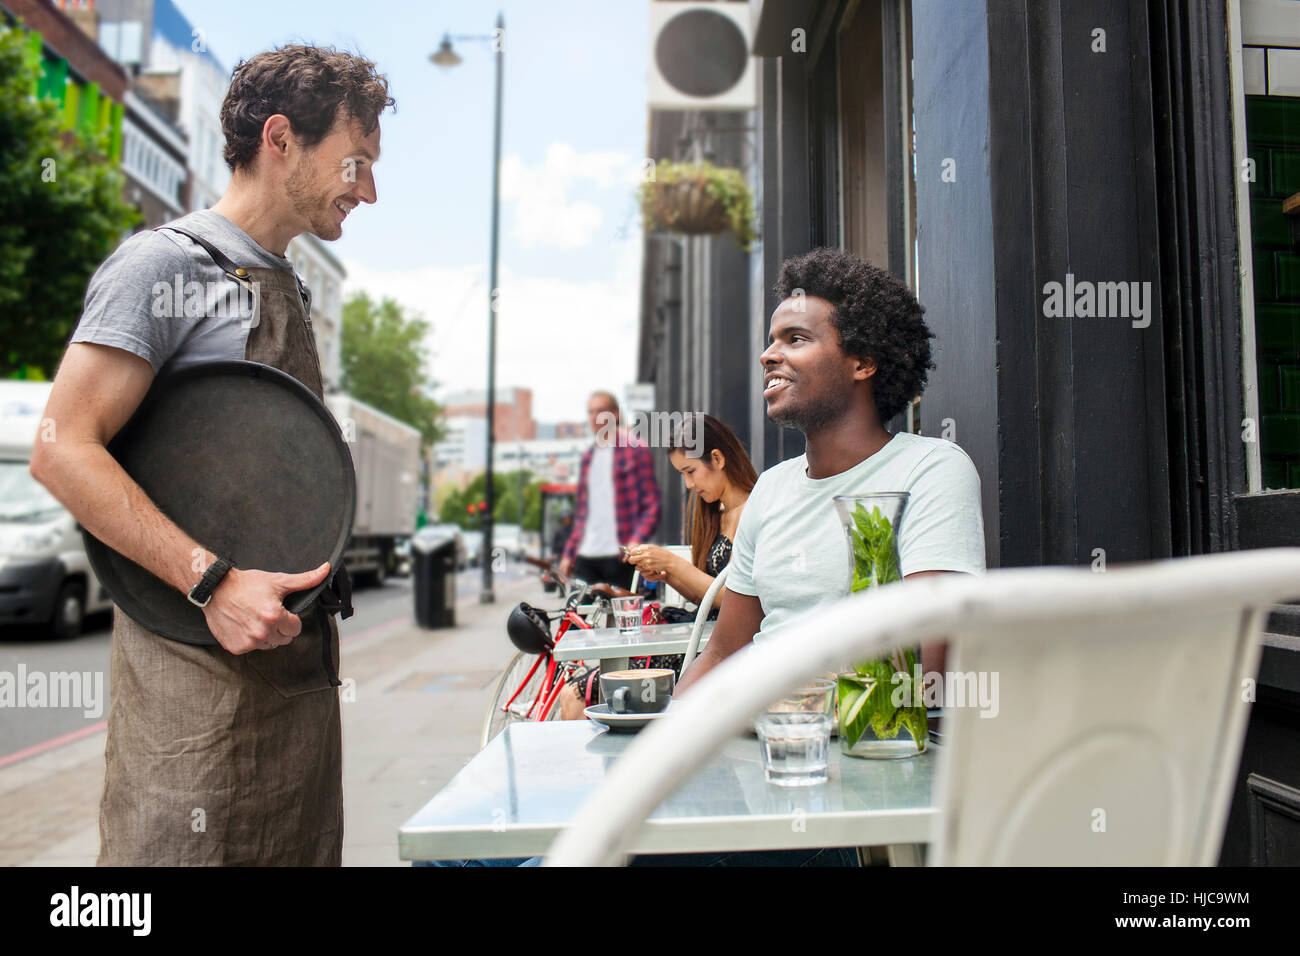 Waiter serving young man at city sidewalk cafe Banque D'Images